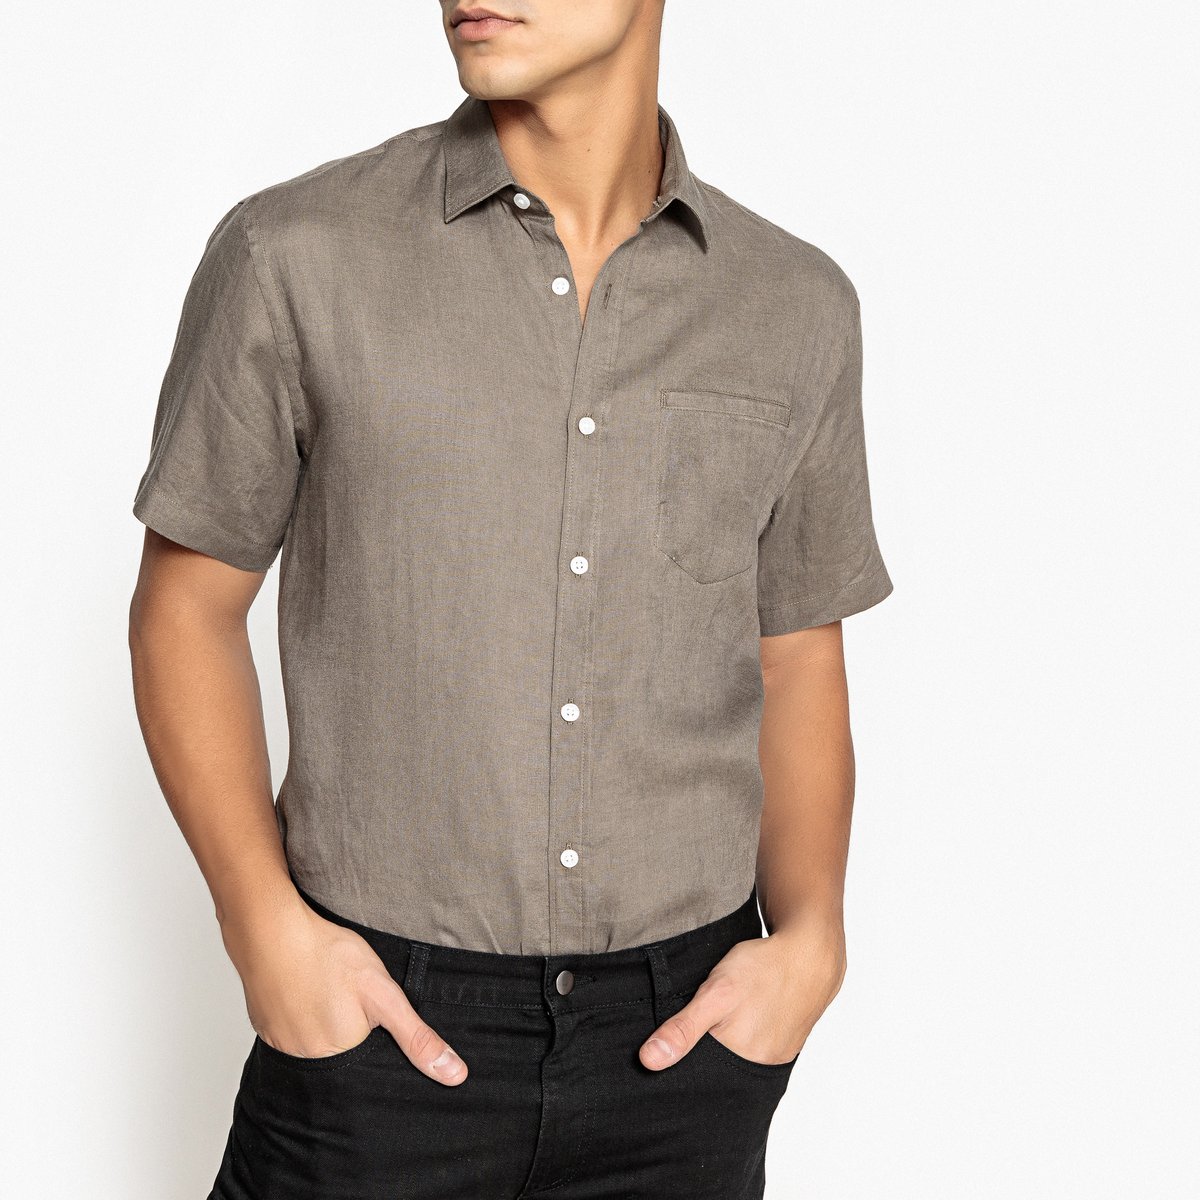 La Redoute рубашки из льна мужские. Рубашка ла Габриэль. Short sleeved shirt